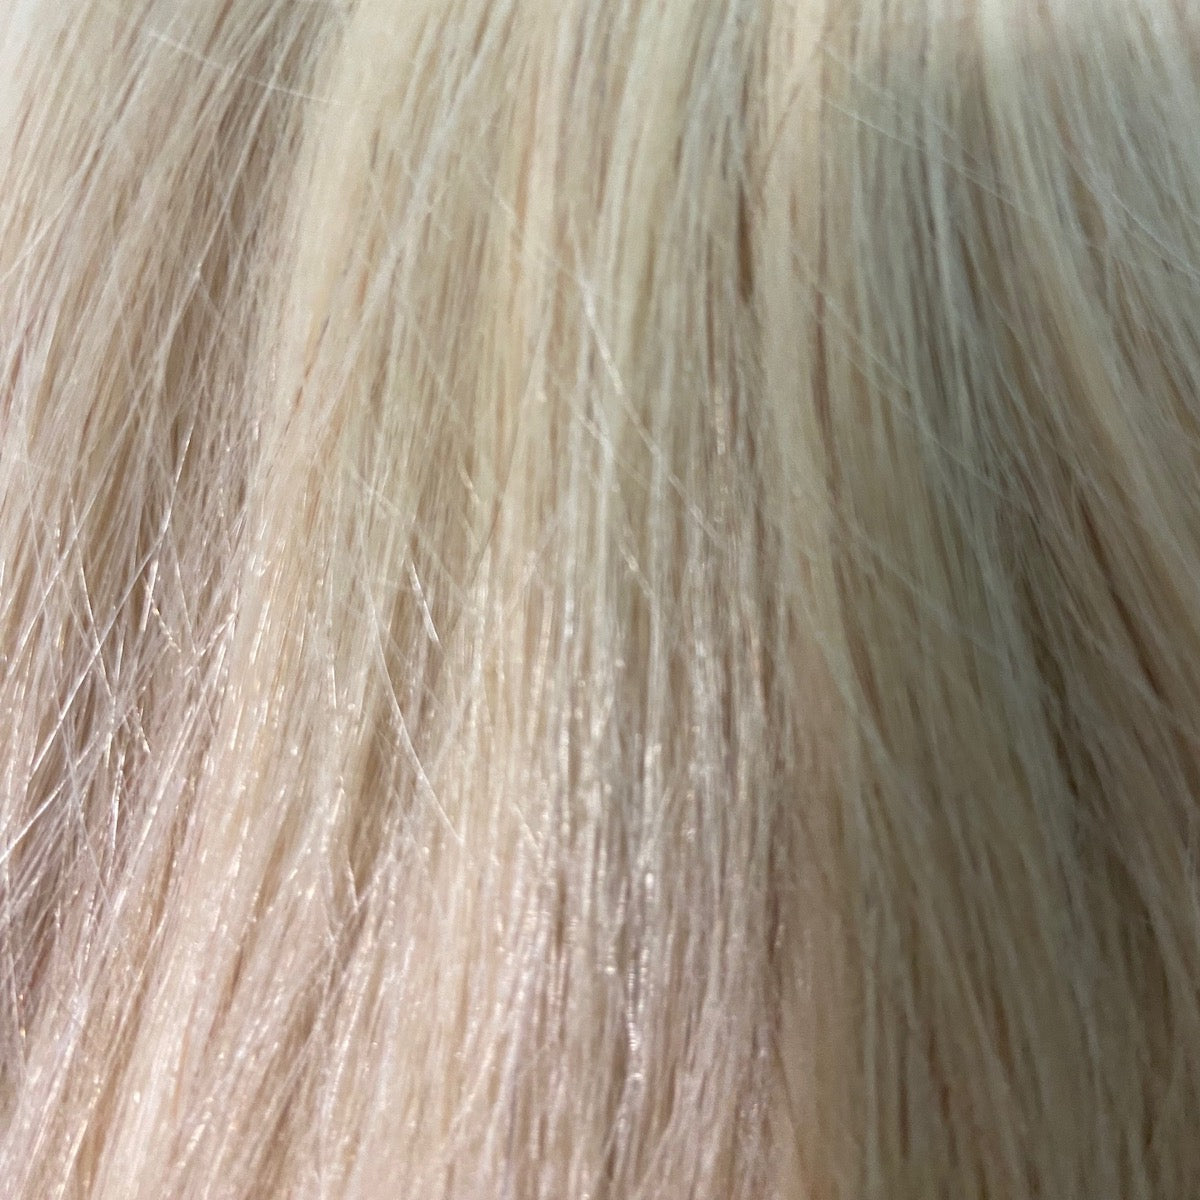 Machine-Tied Weft 16" 120g Professional Hair Extensions - #19 Desert Blonde